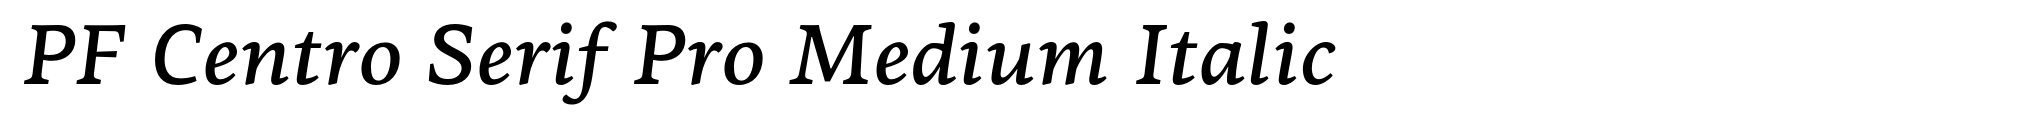 PF Centro Serif Pro Medium Italic image